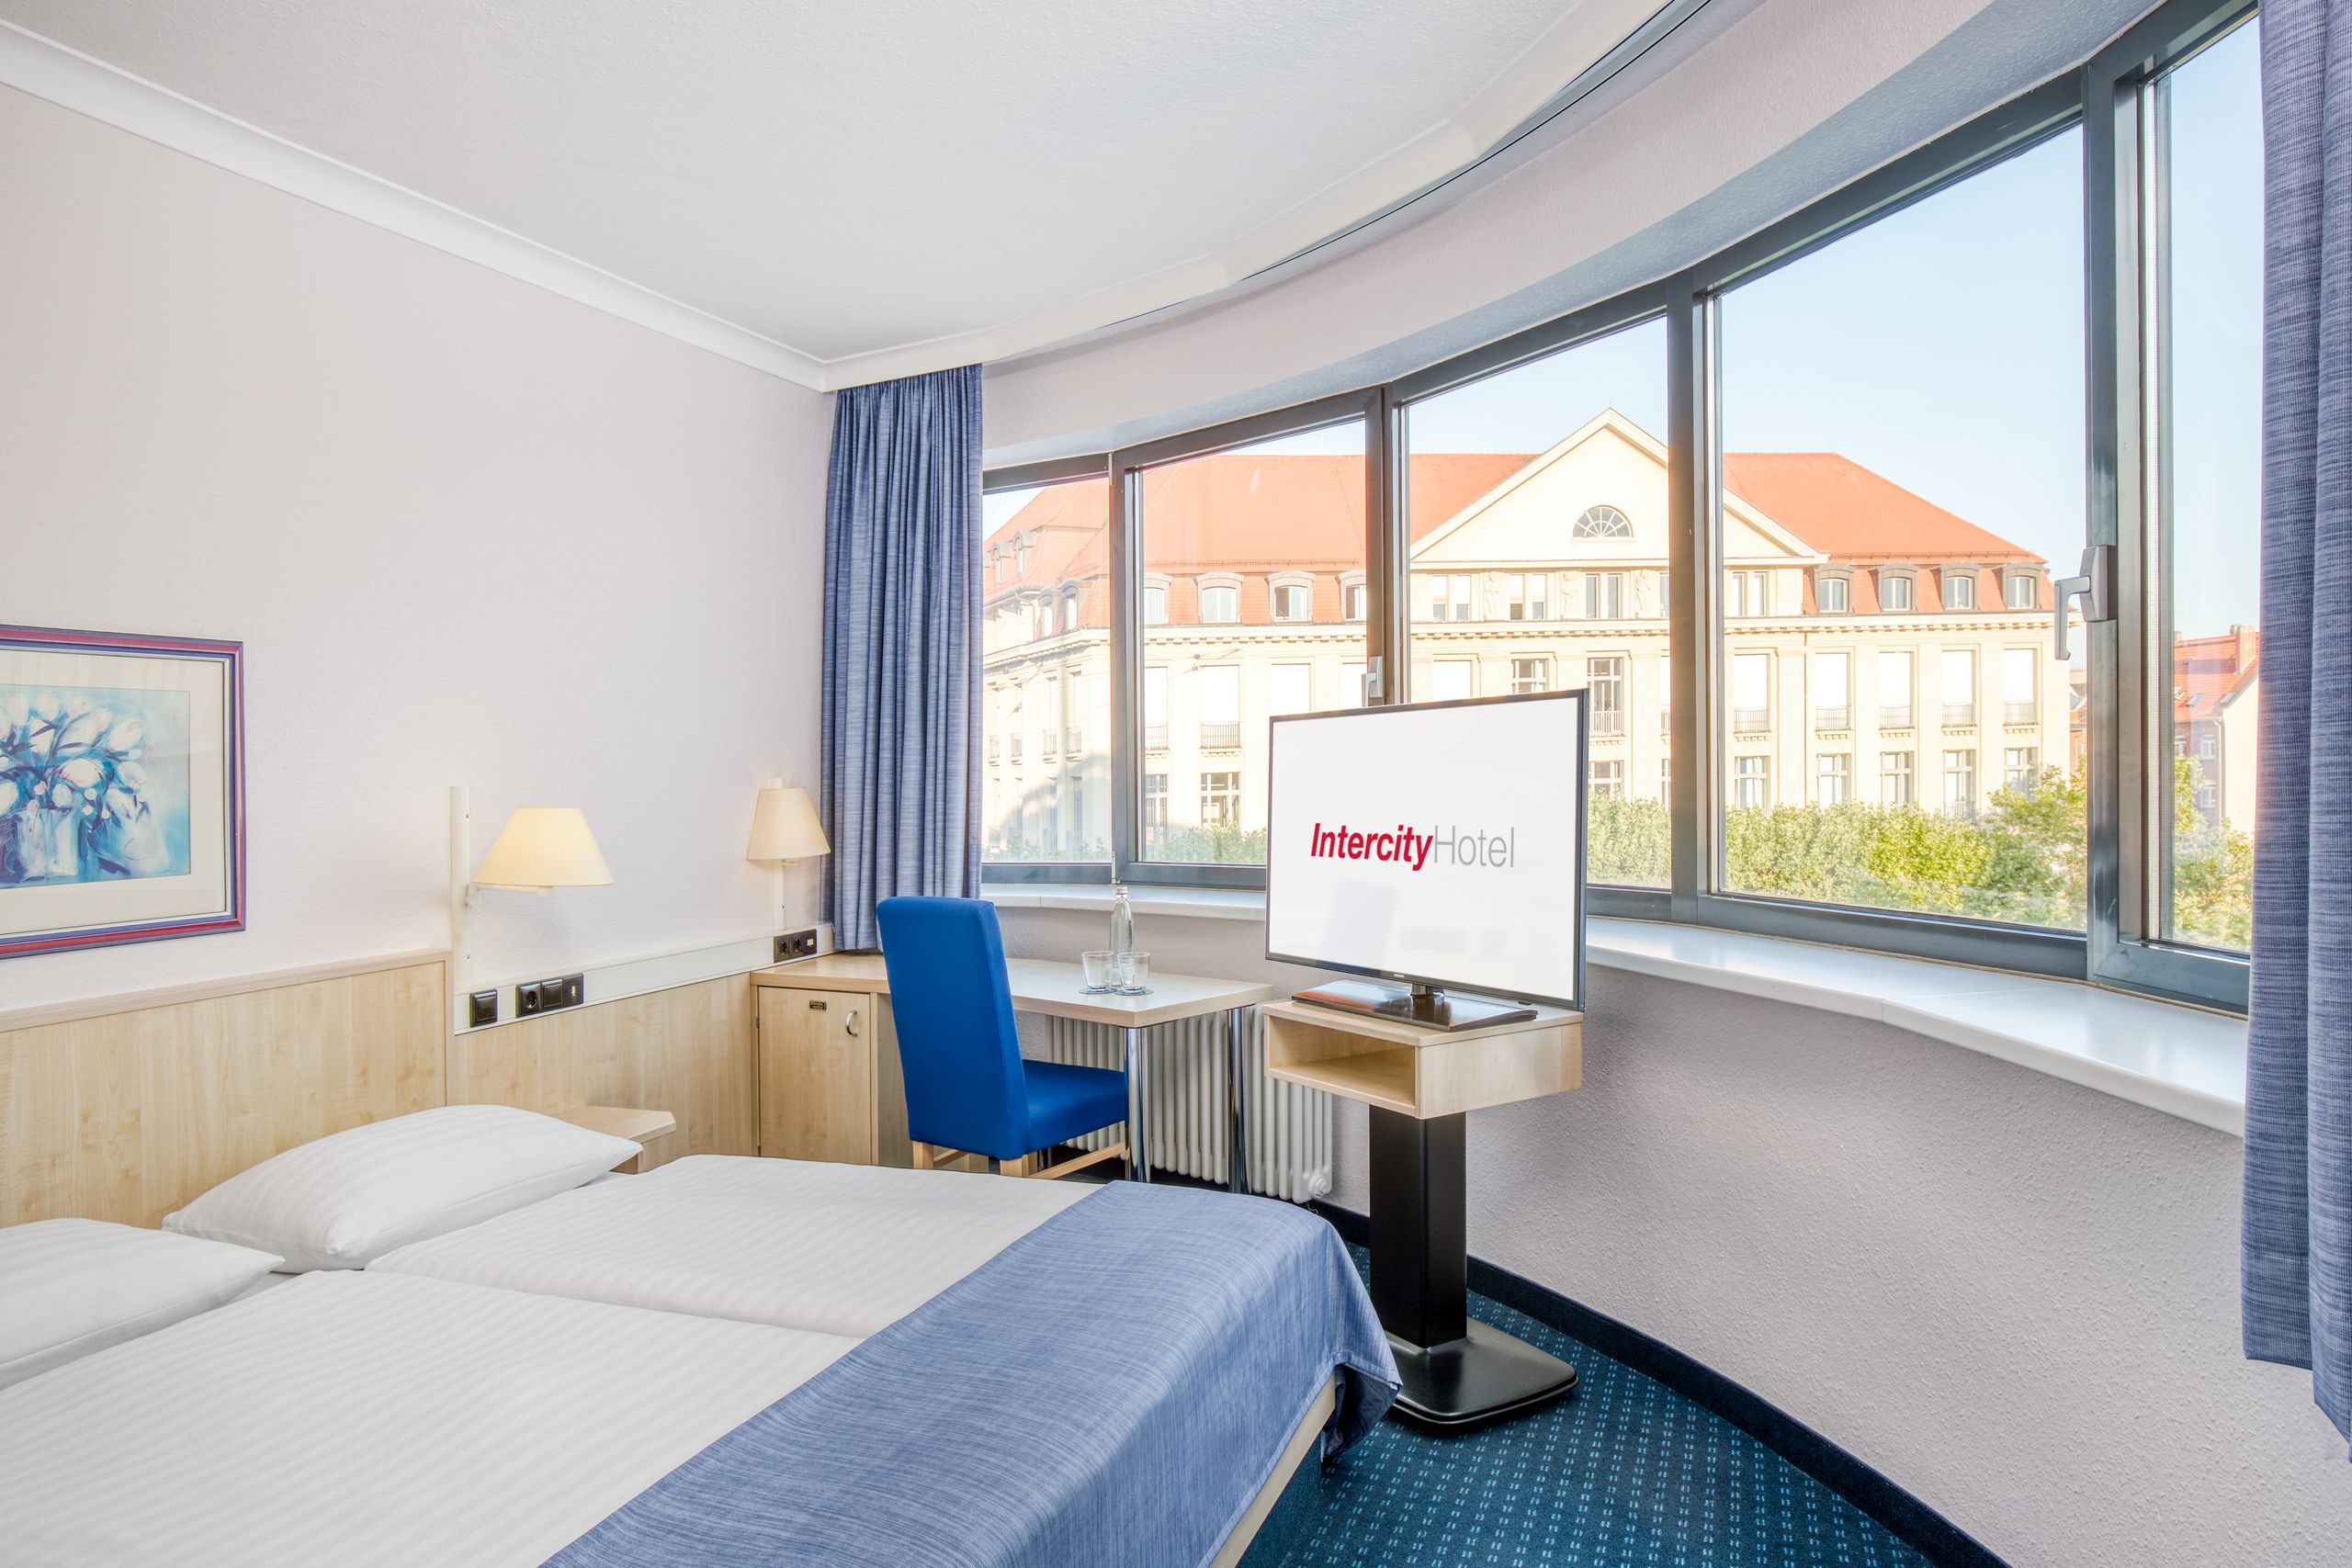 IntercityHotel Erfurt - Tower room